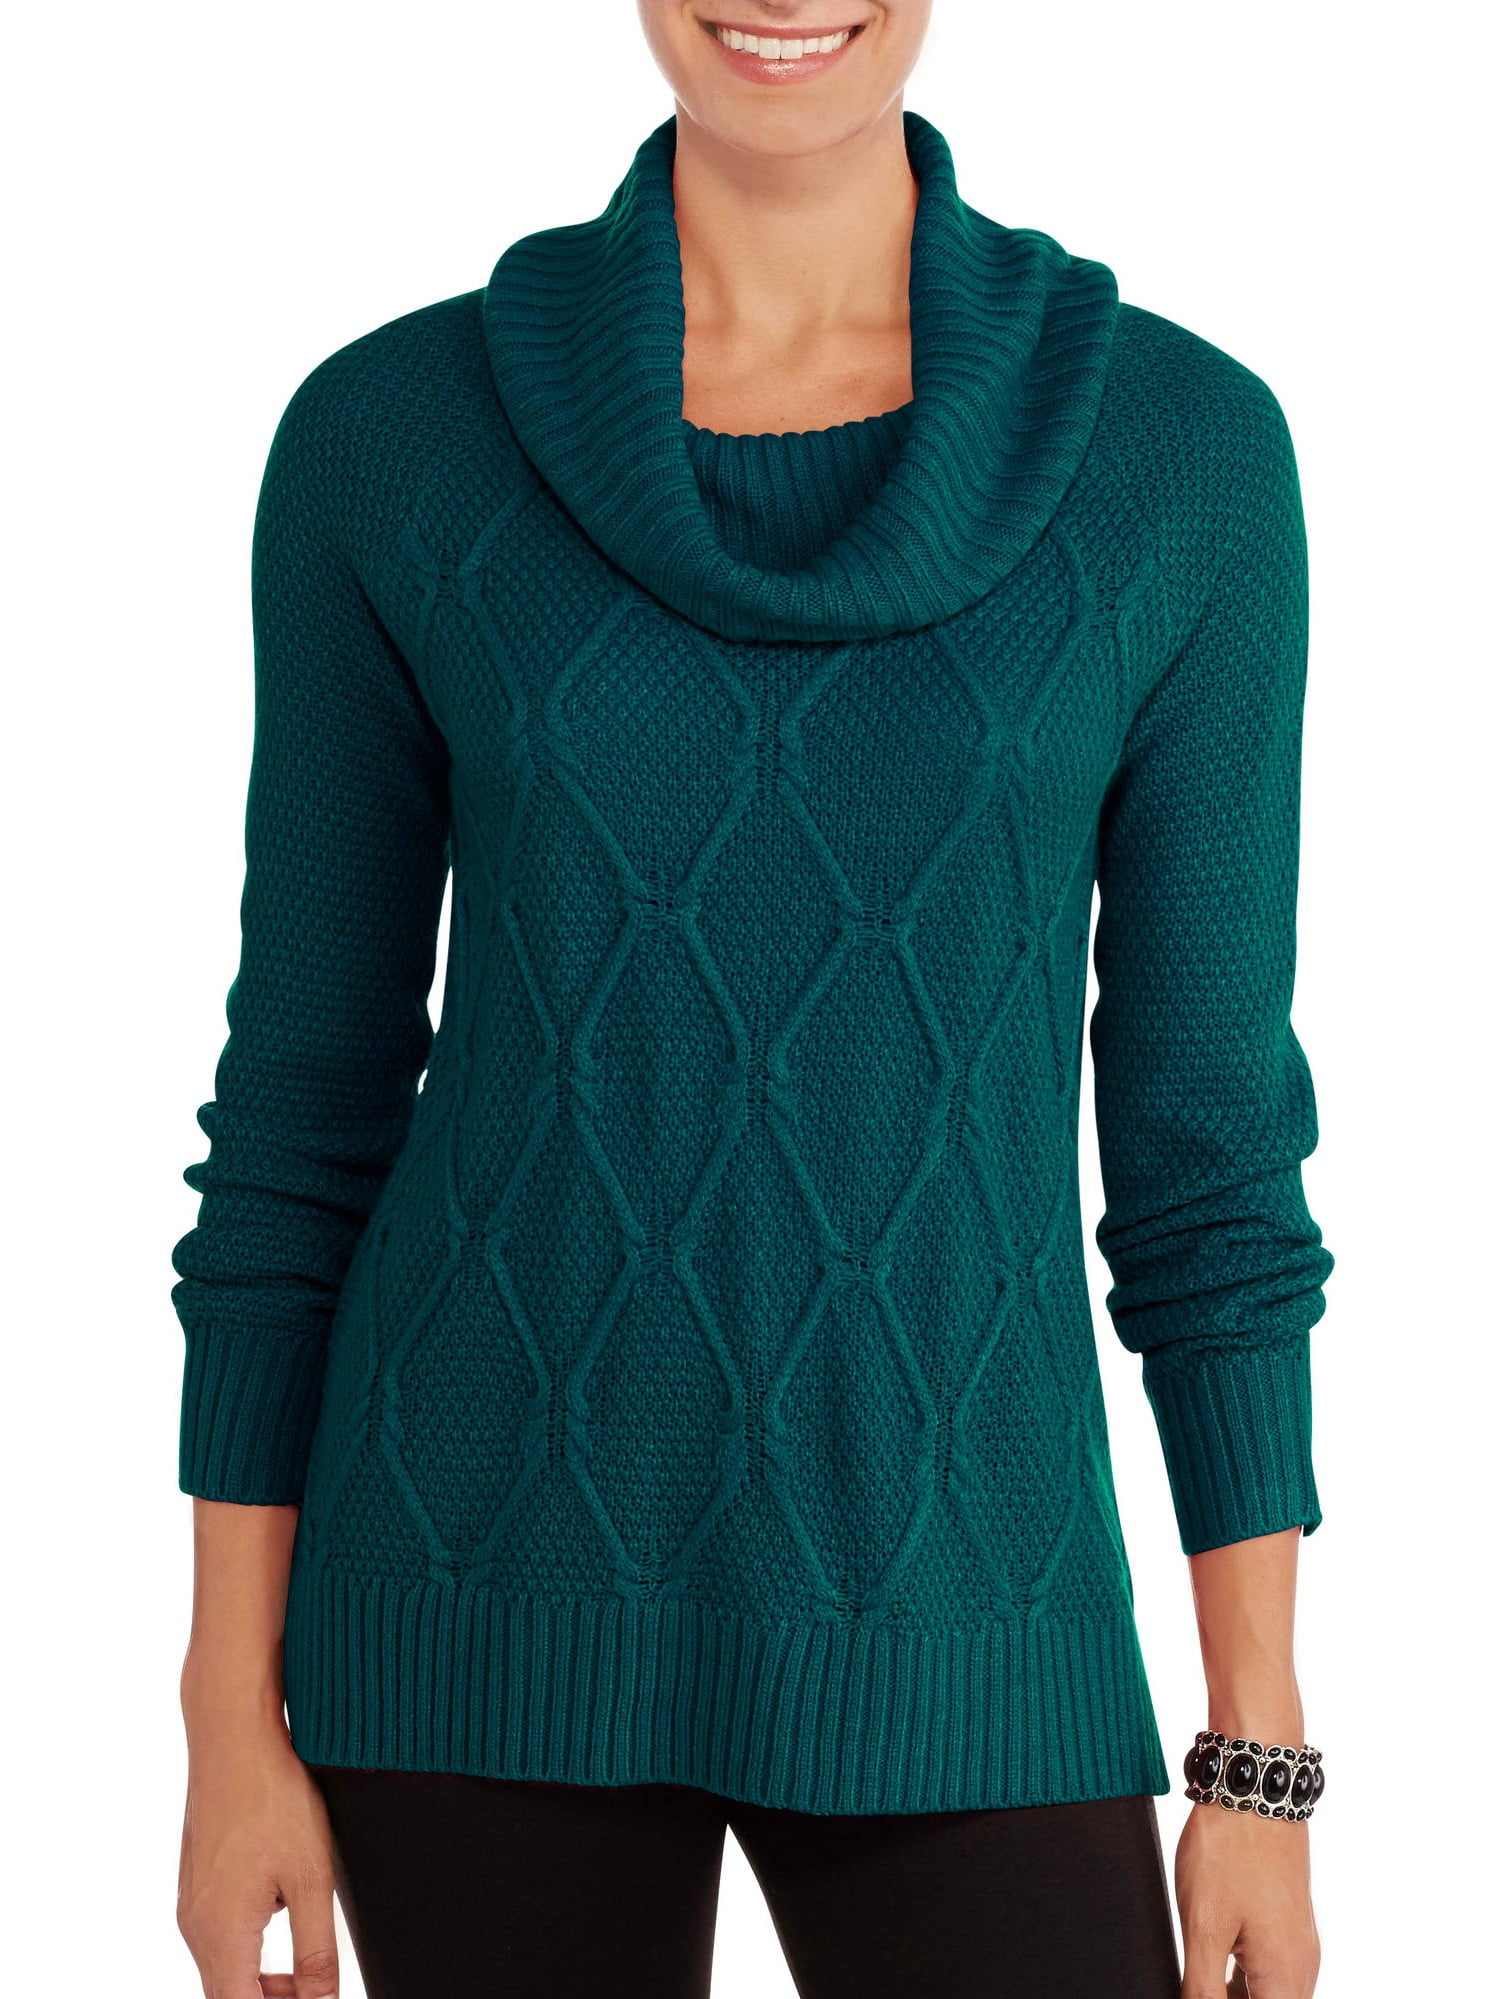 Women's Cowl Neck Cable Sweater - Walmart.com